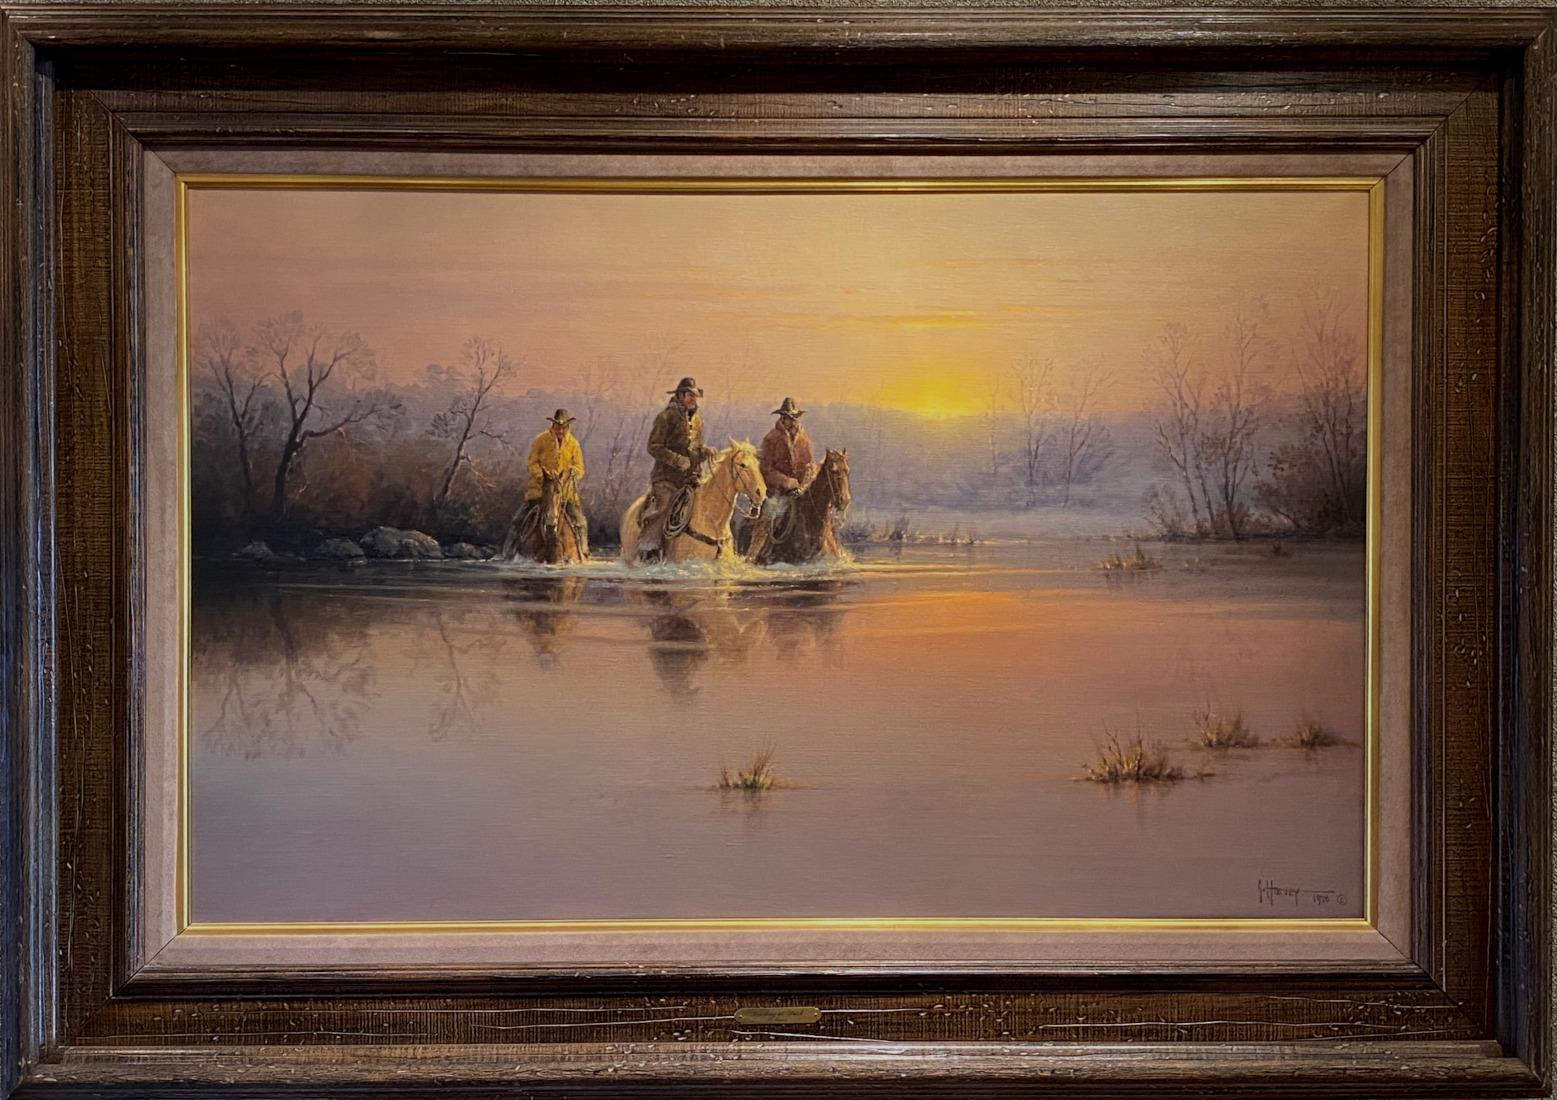 G. Harvey Landscape Painting - "FORDING AT DUSK"  COWBOYS, HORSEBACK, RIVER CROSSING, LIGHT, FRAMED 44 X 62 